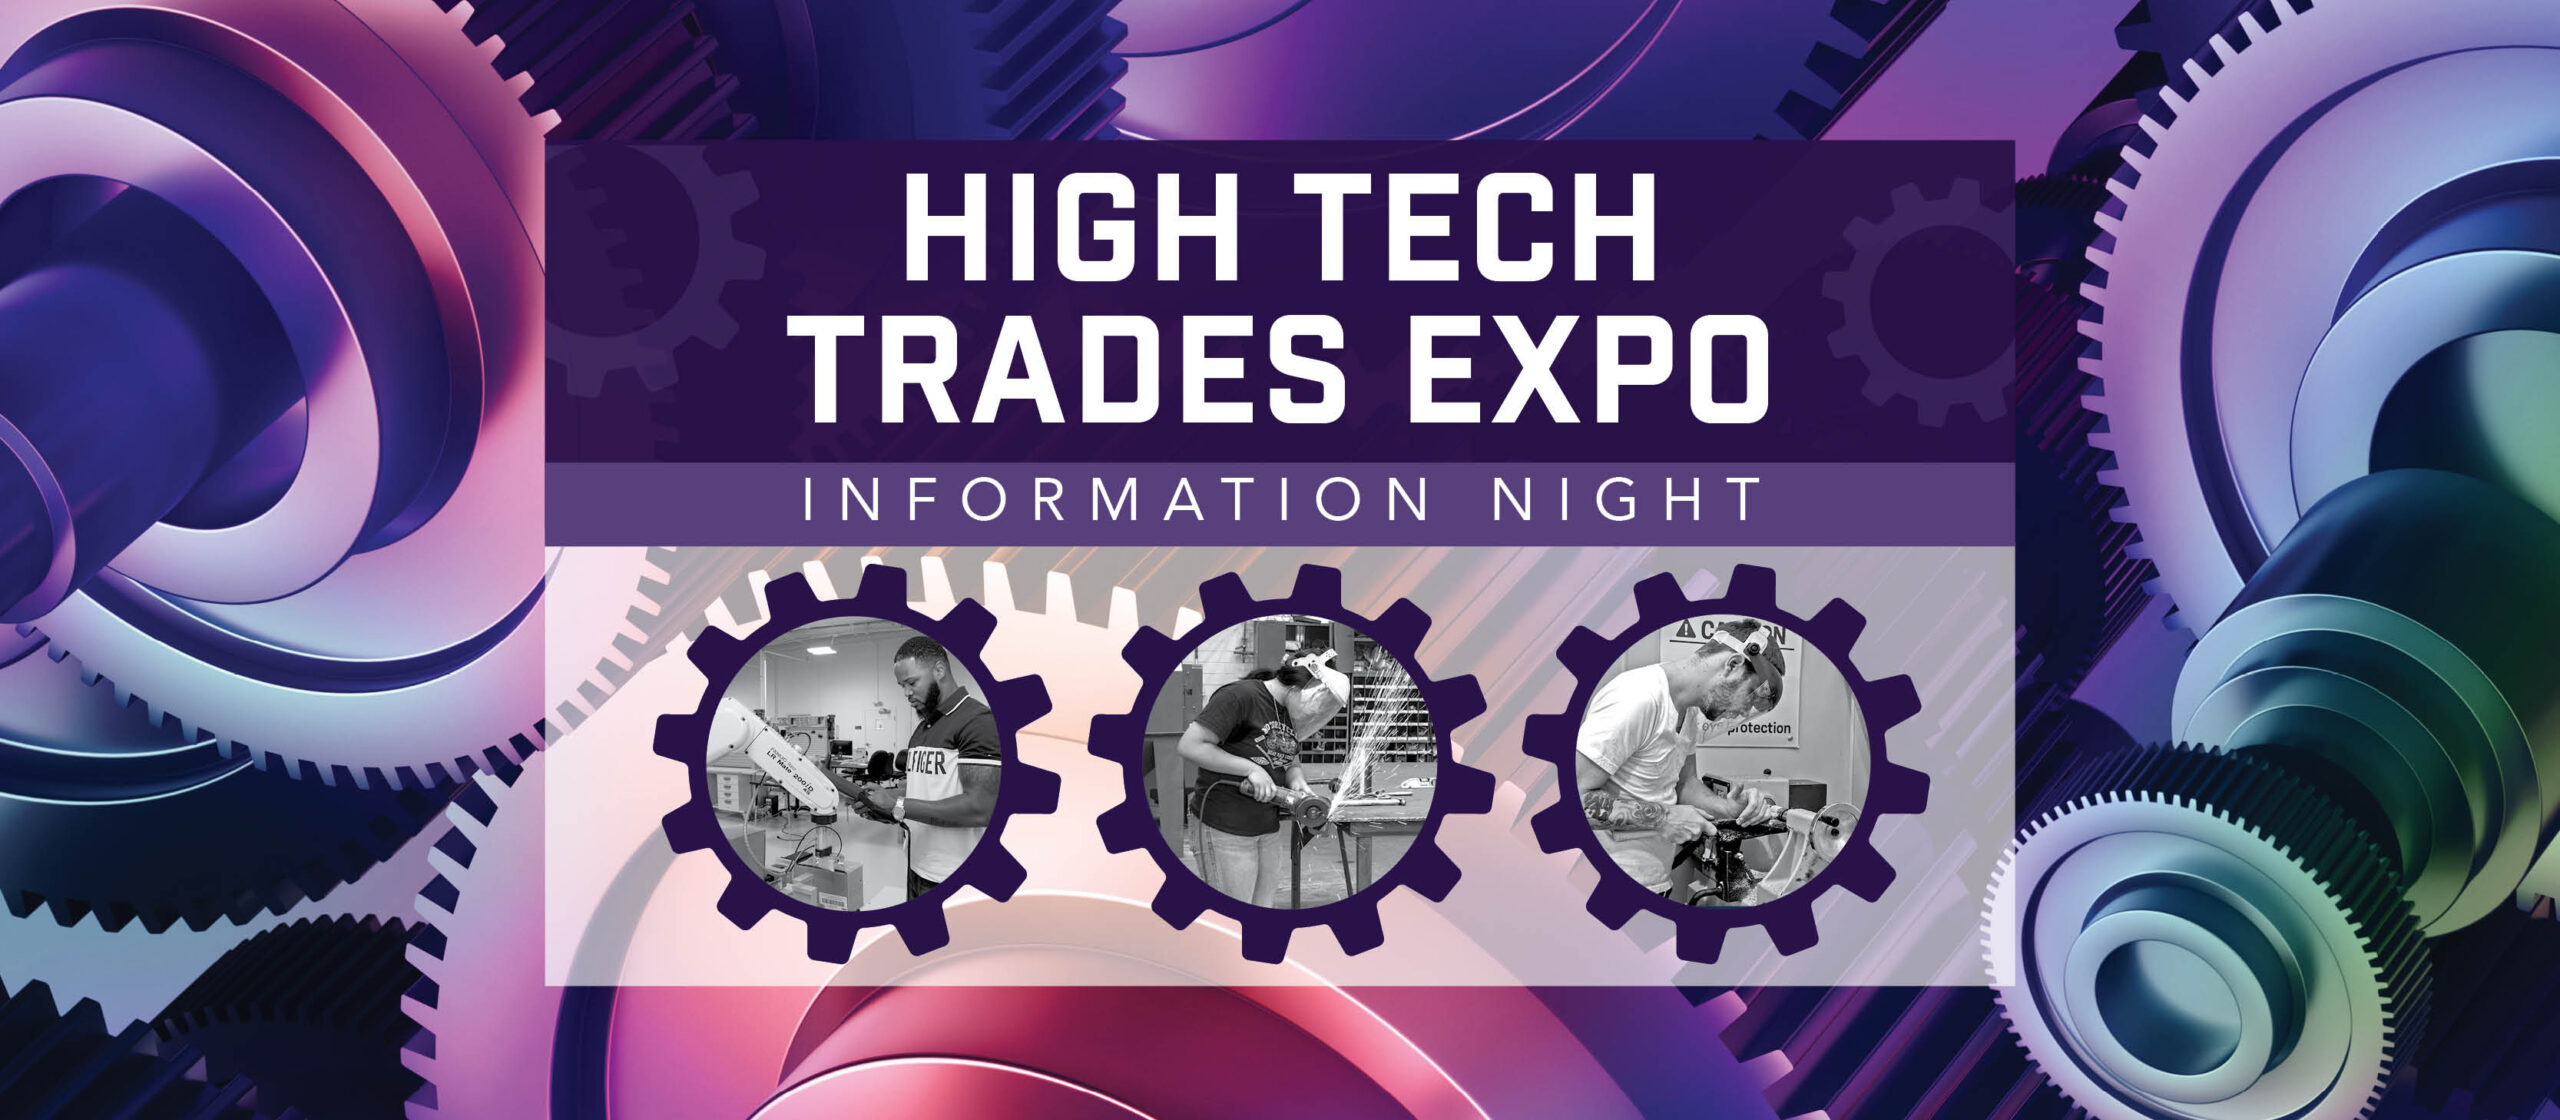 High Tech Trades Expo Information Night